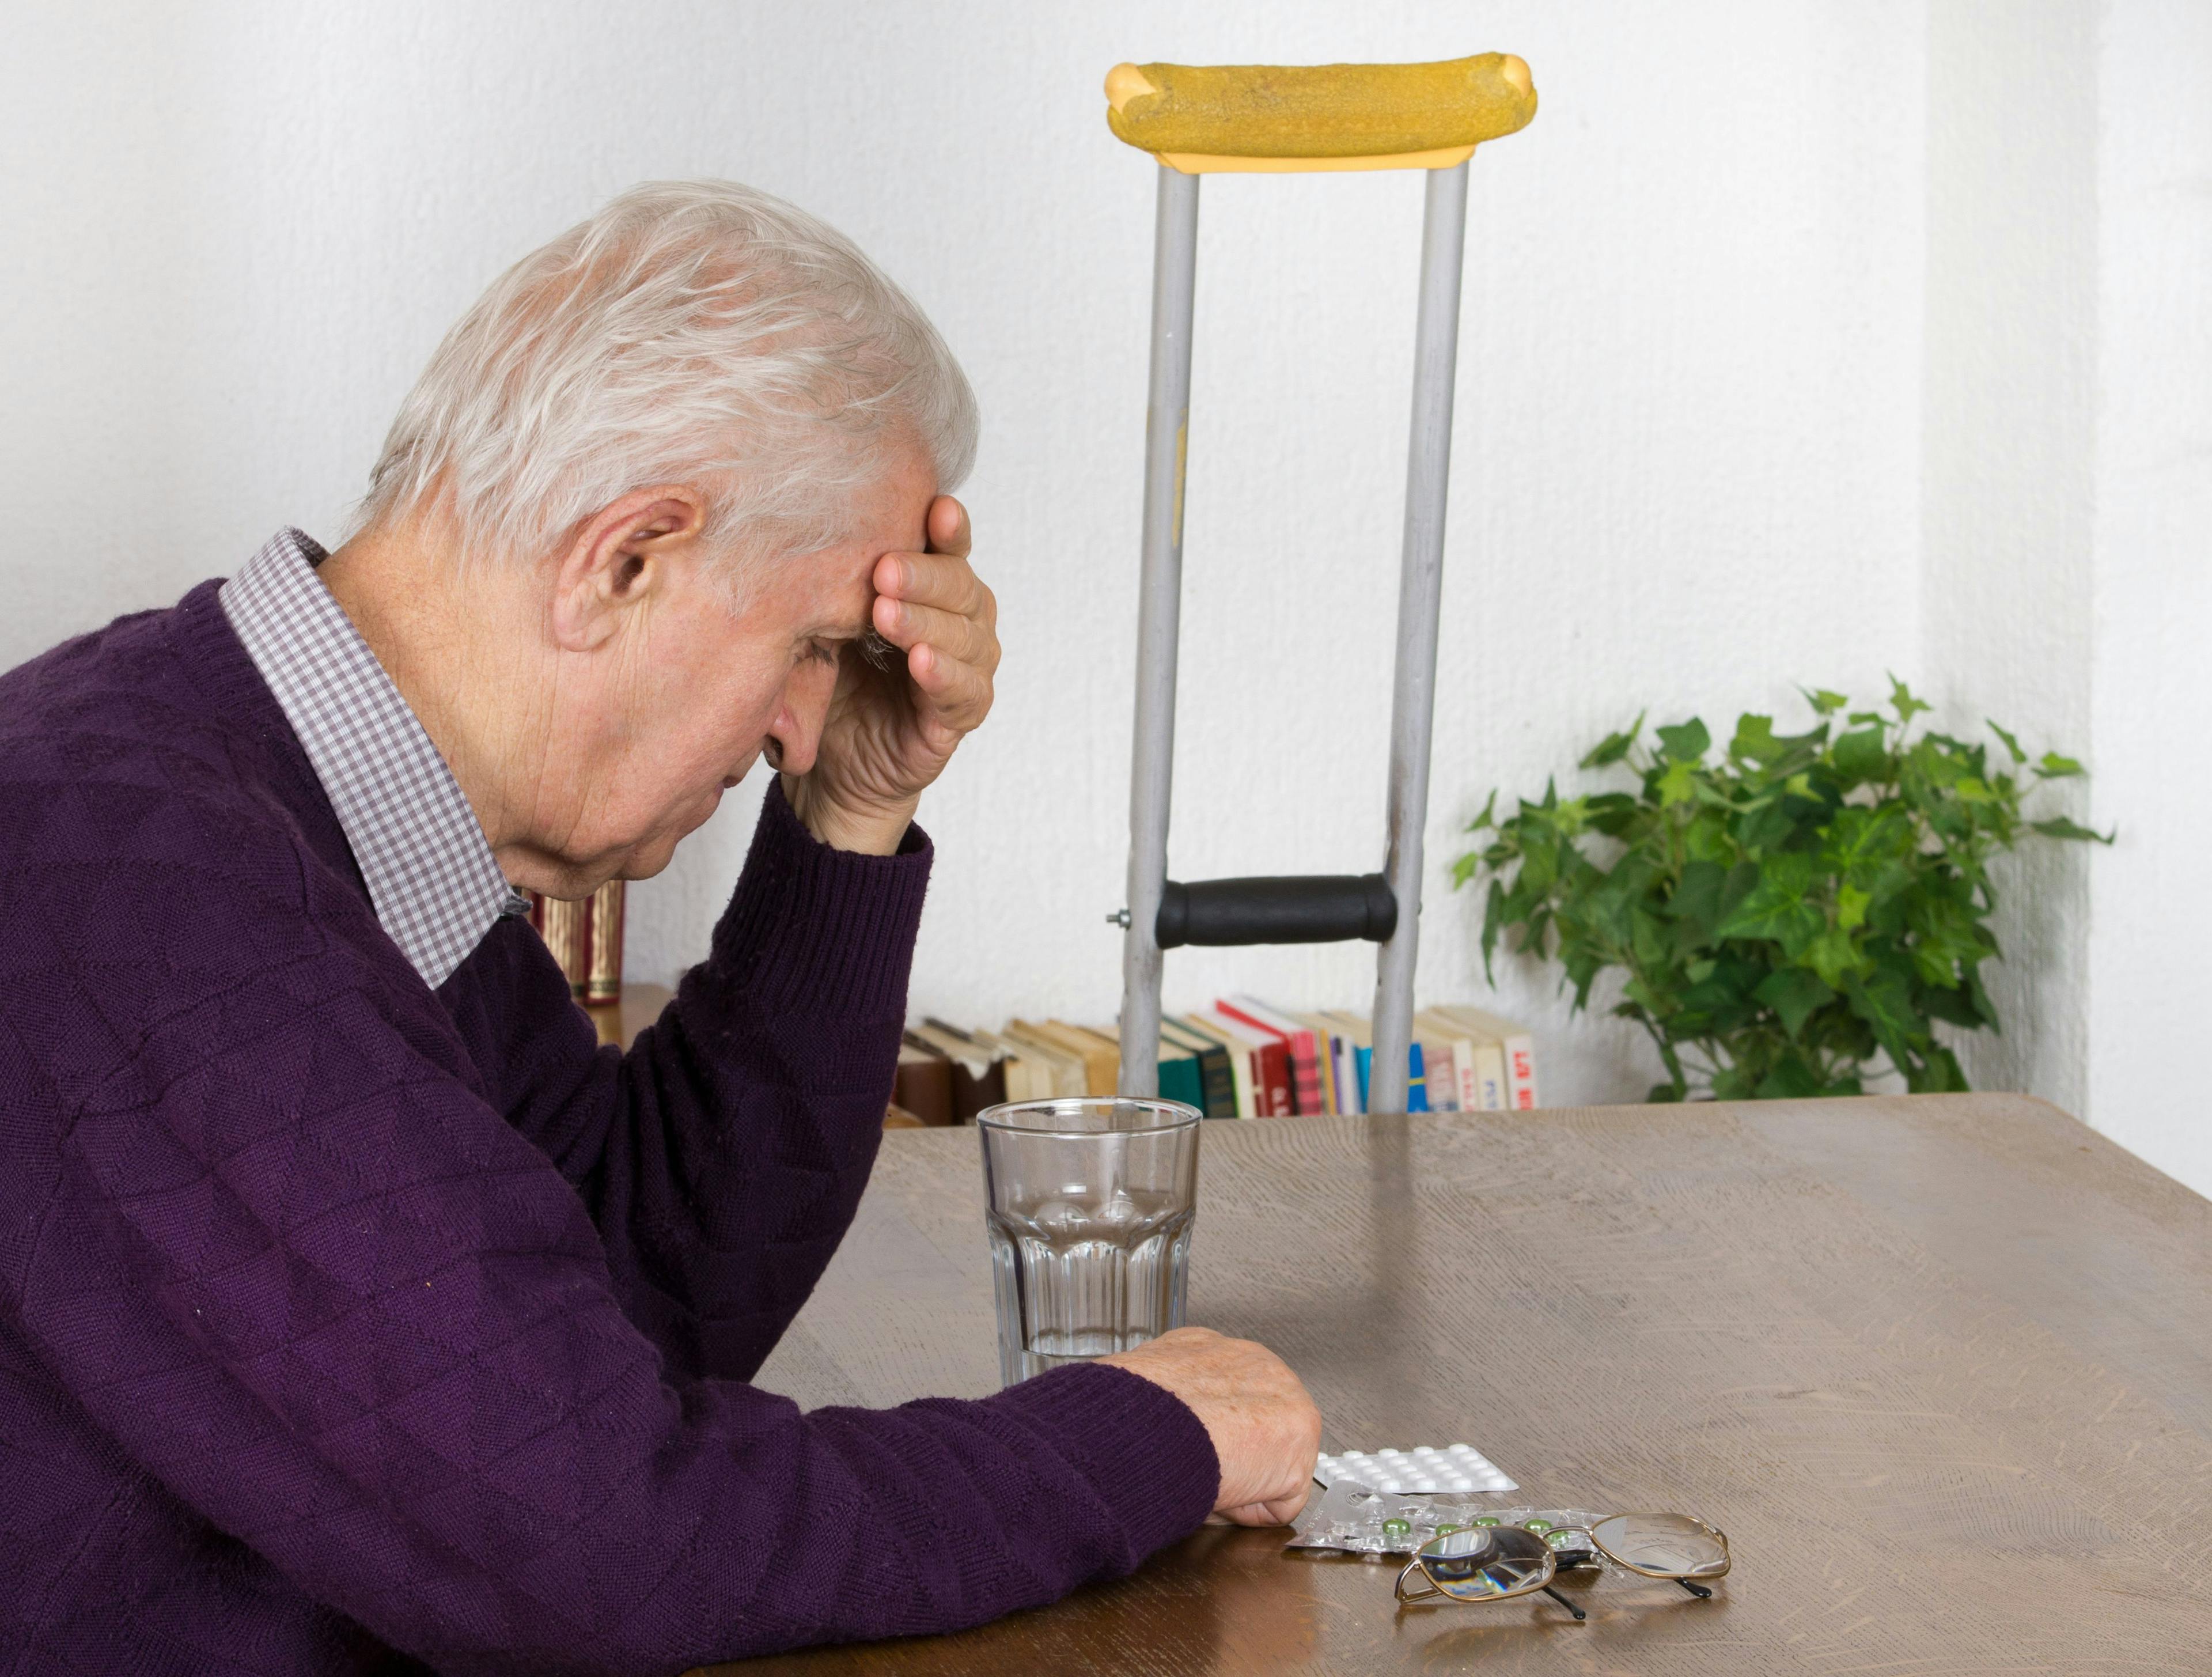 Senior man with headache | Image credit: Budimir Jevtic - stock.adobe.com